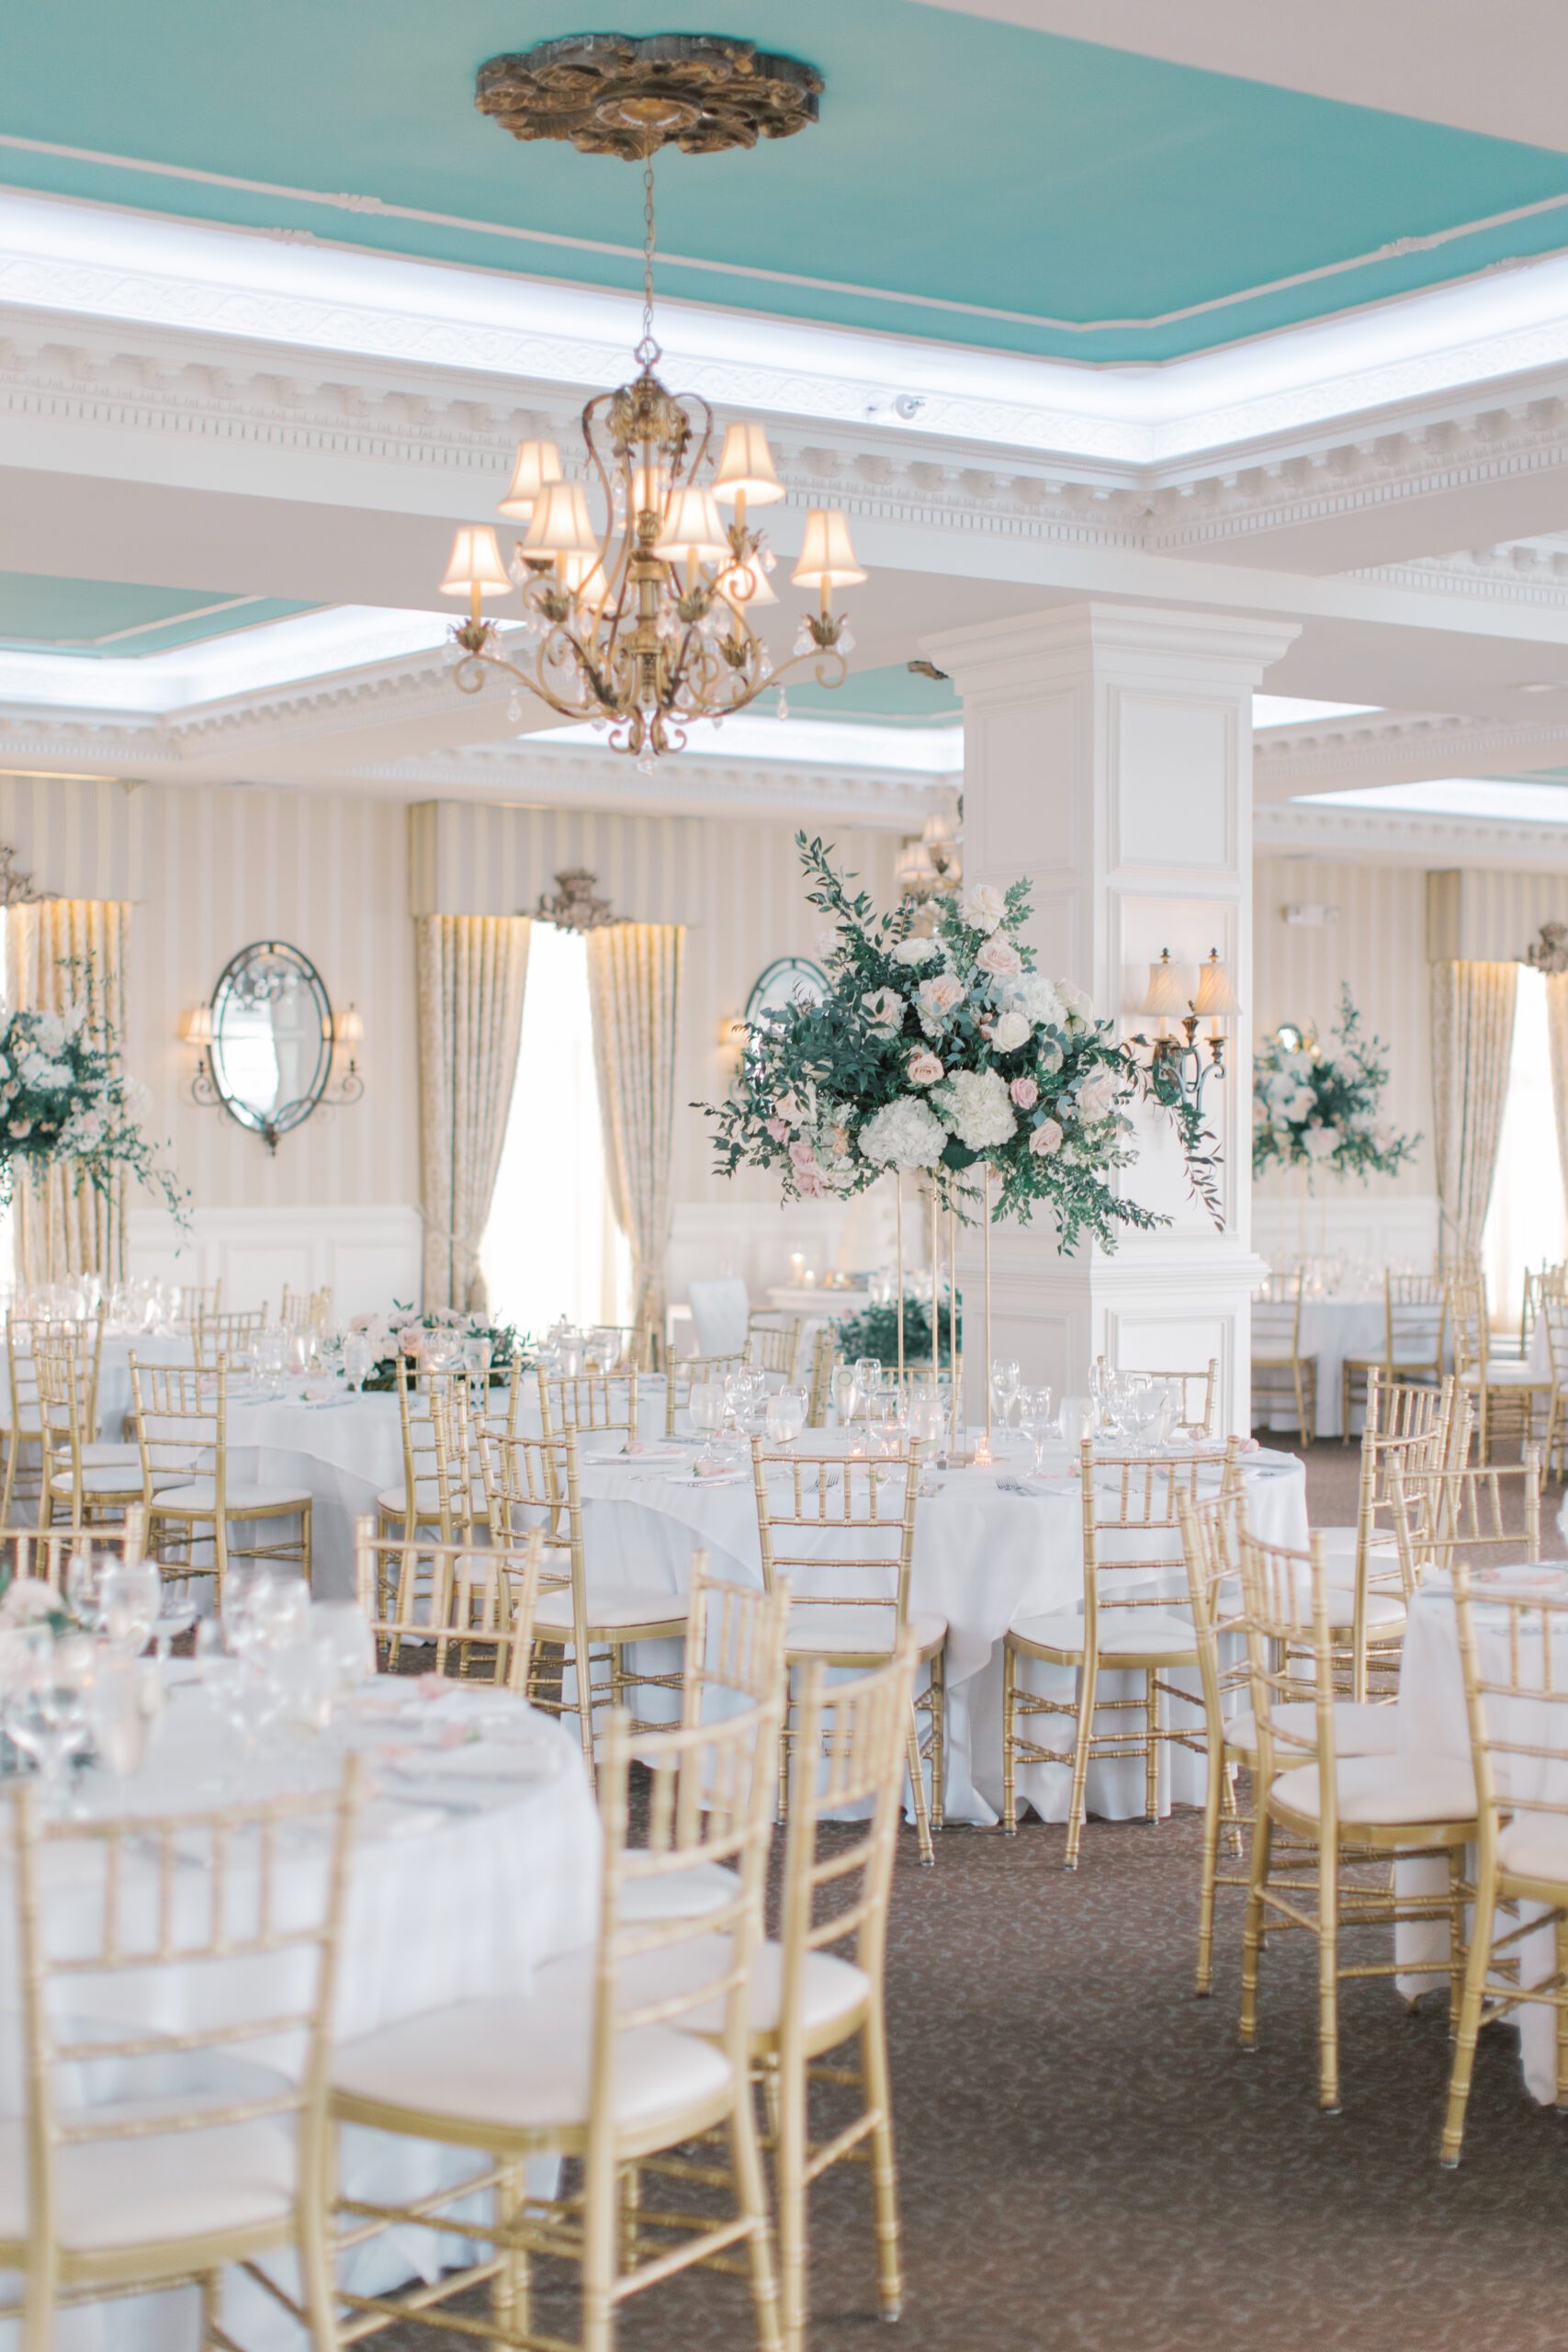 Reception details in the ballroom with Tiffany blue ceiling at Mallard Island Yacht Club. 